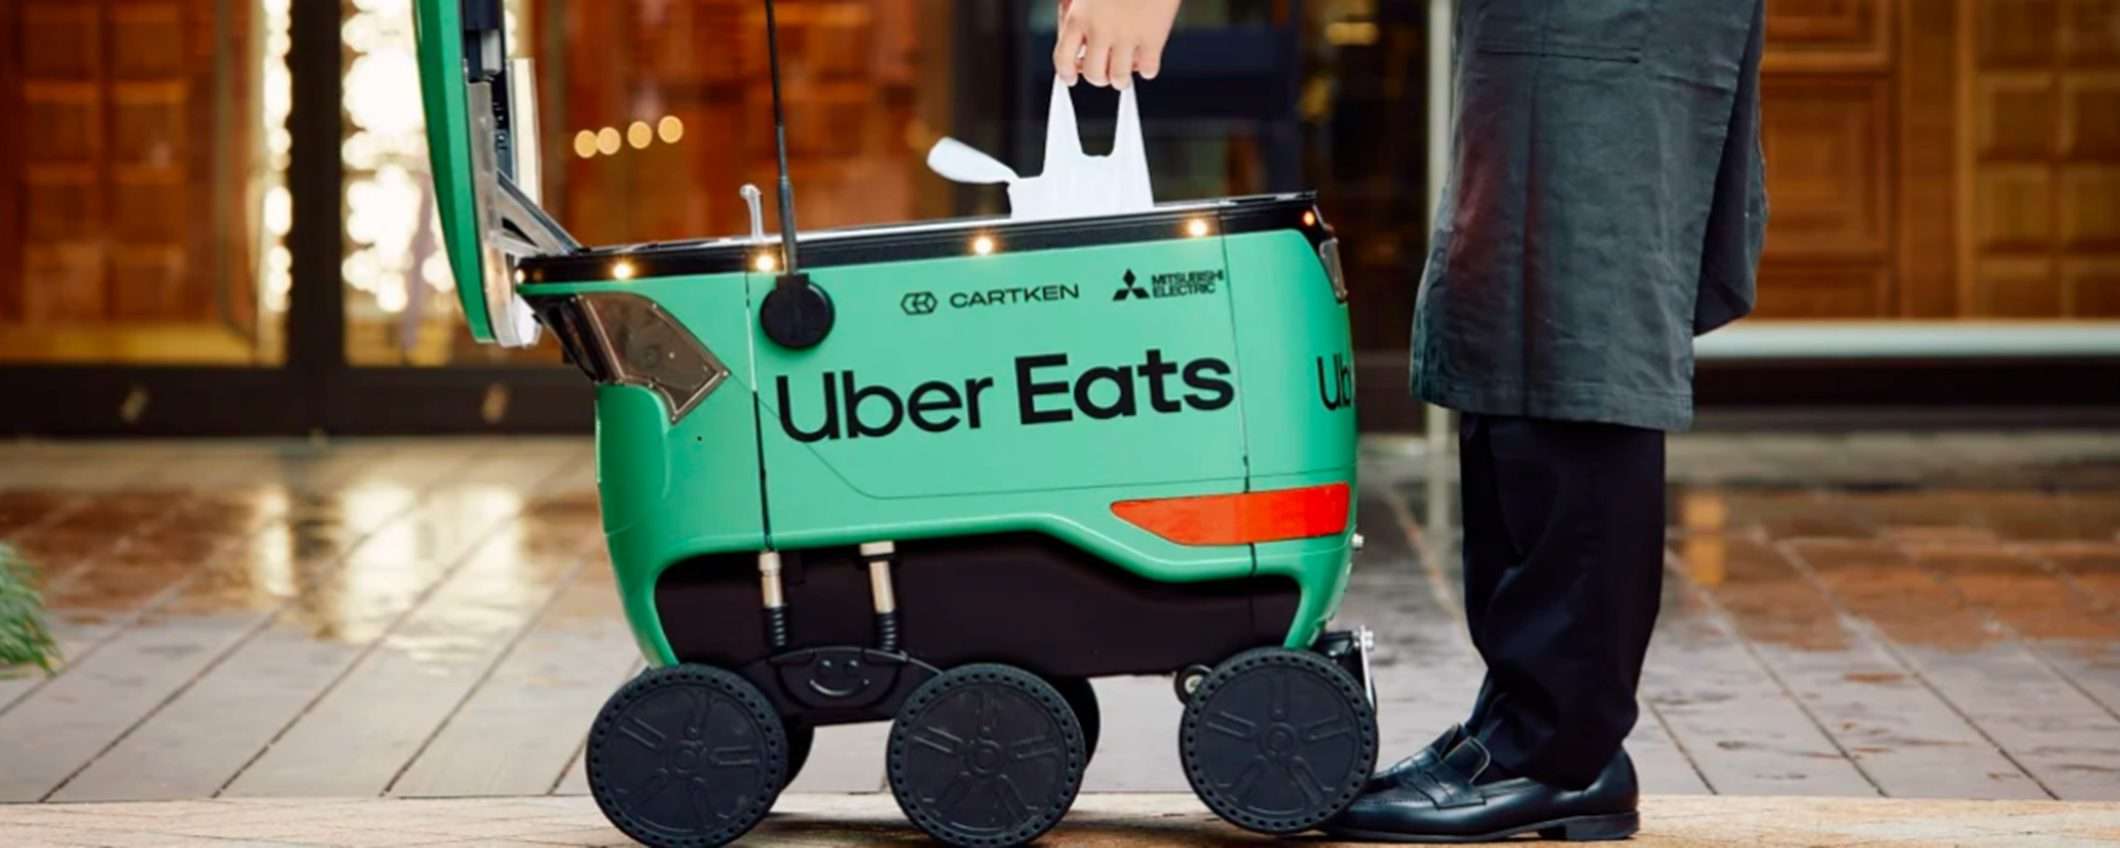 Uber Eats sperimenta le consegne con robot in Giappone